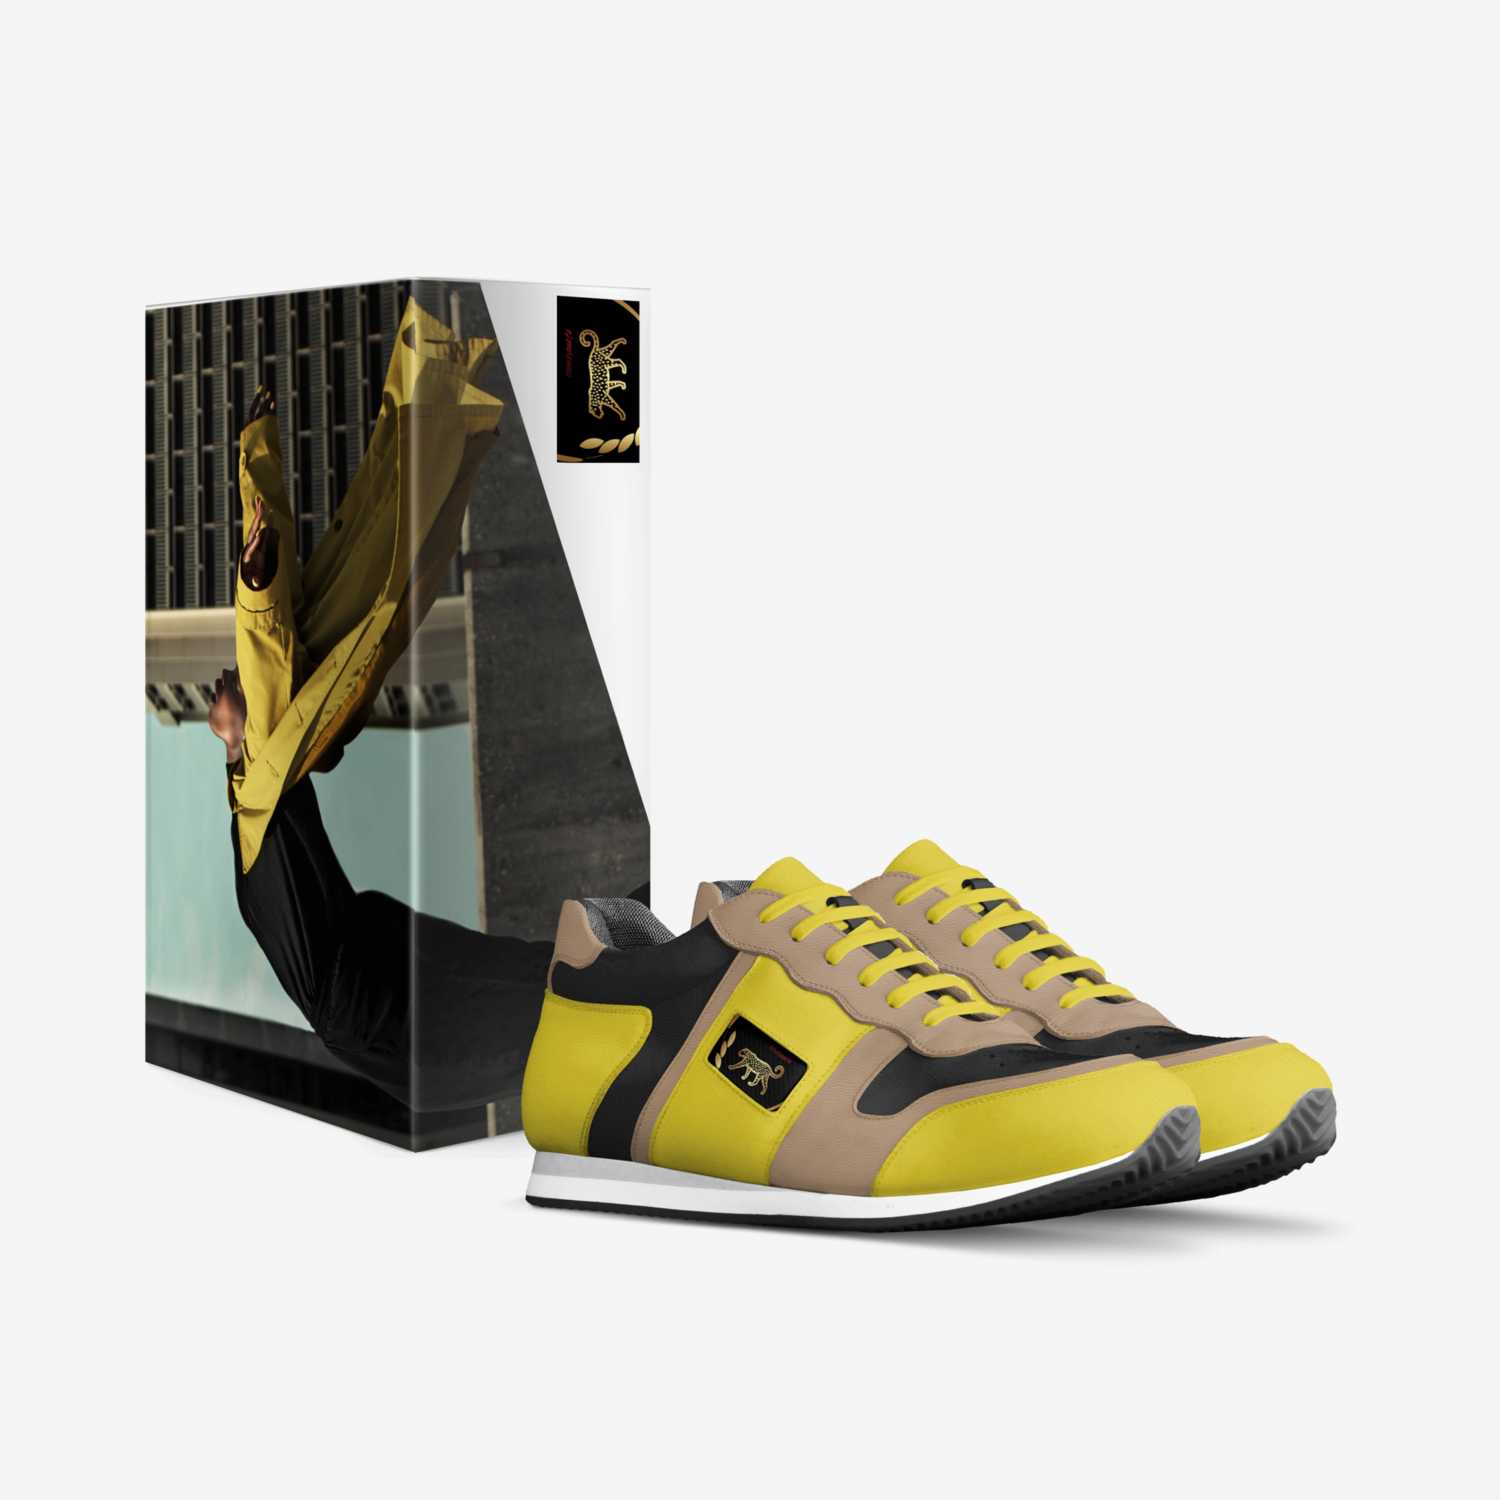 Rushman custom made in Italy shoes by Nima Ghalandari | Box view